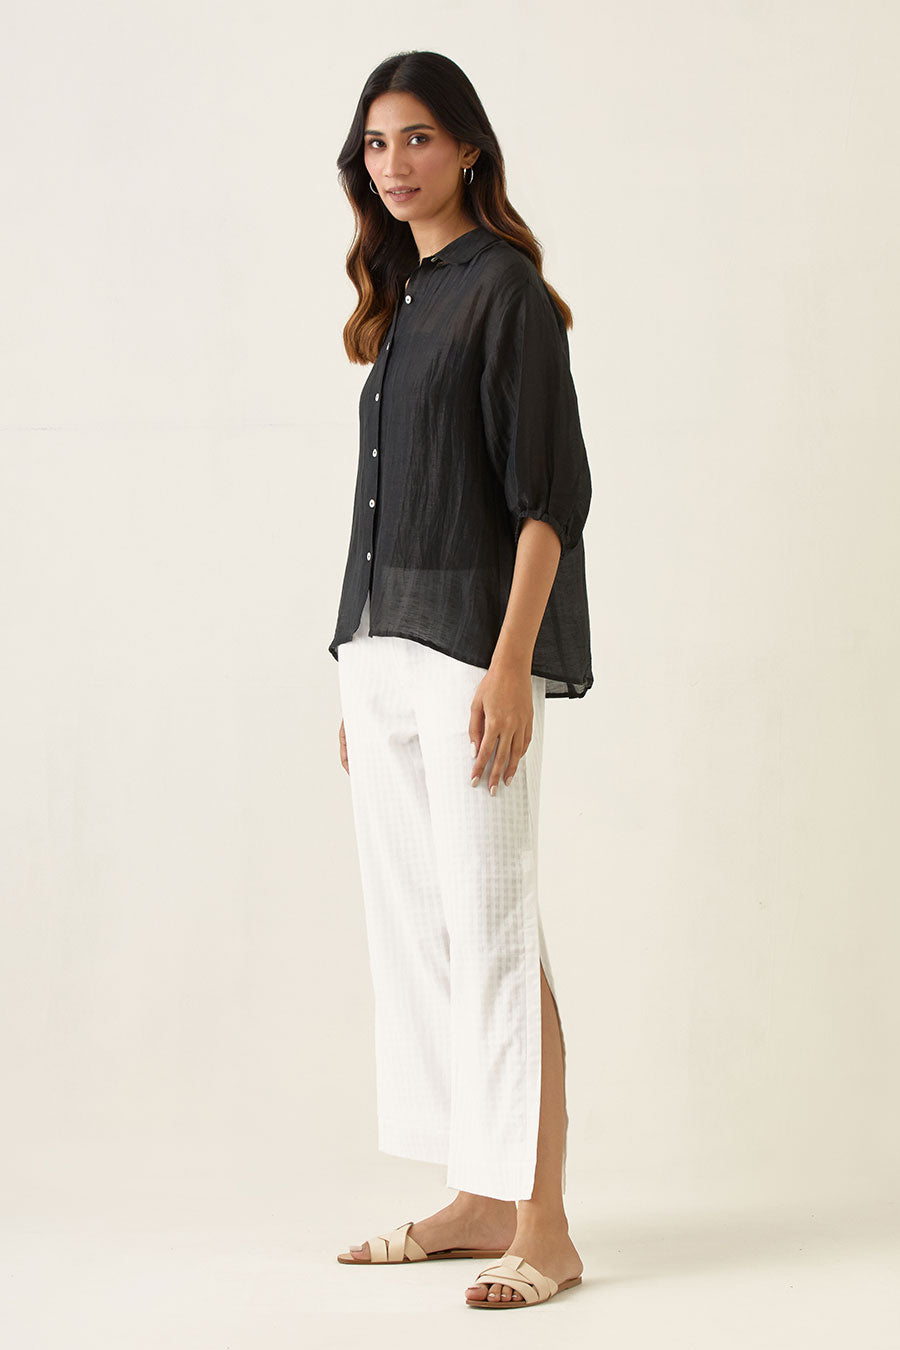 Black Linen Silk Shirt with High Slit Pant Co-ord Set